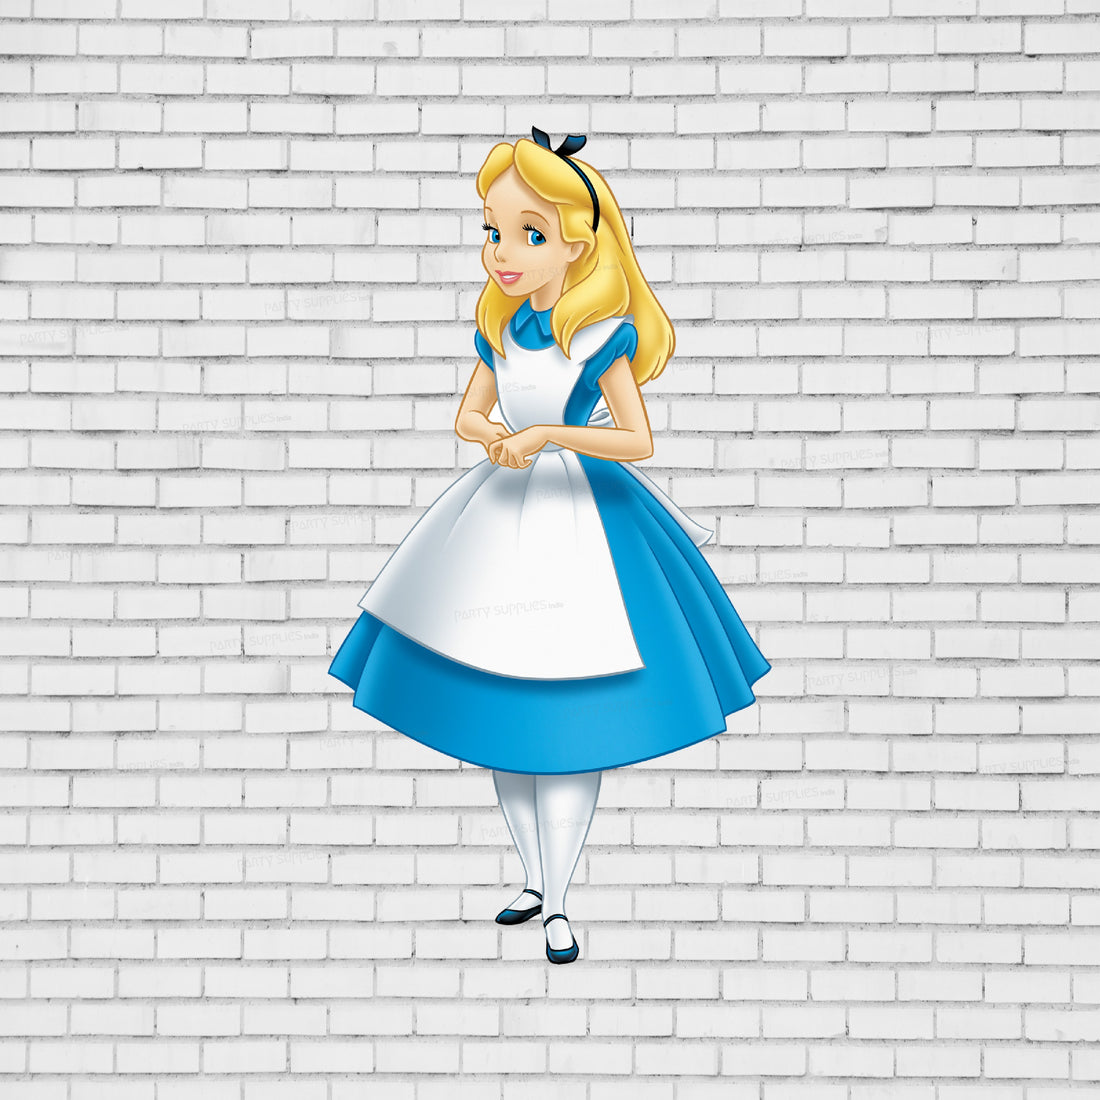 PSI Alice in Wonderland Cutout - 03